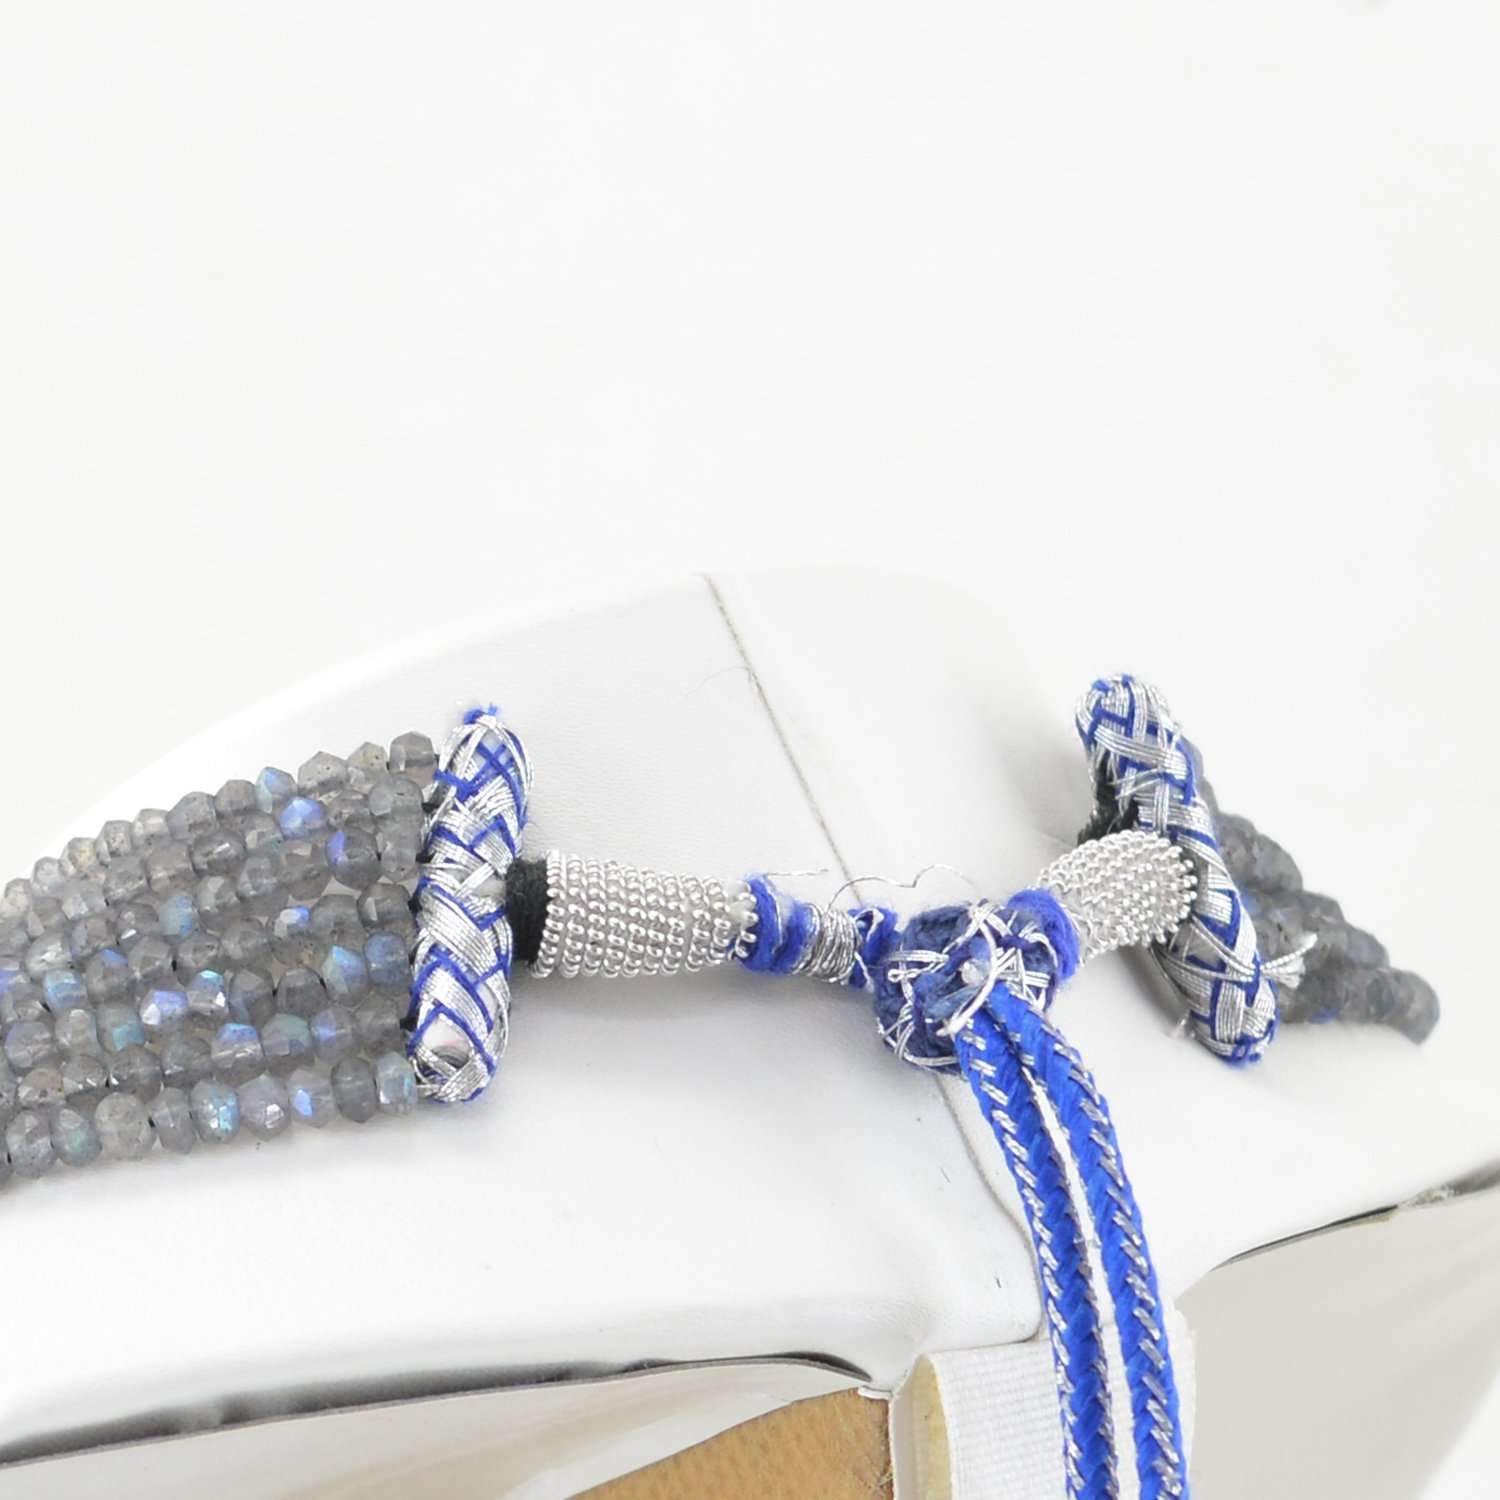 gemsmore:Natural Blue Flash Labradorite Necklace 7 Strand Round Cut Beads